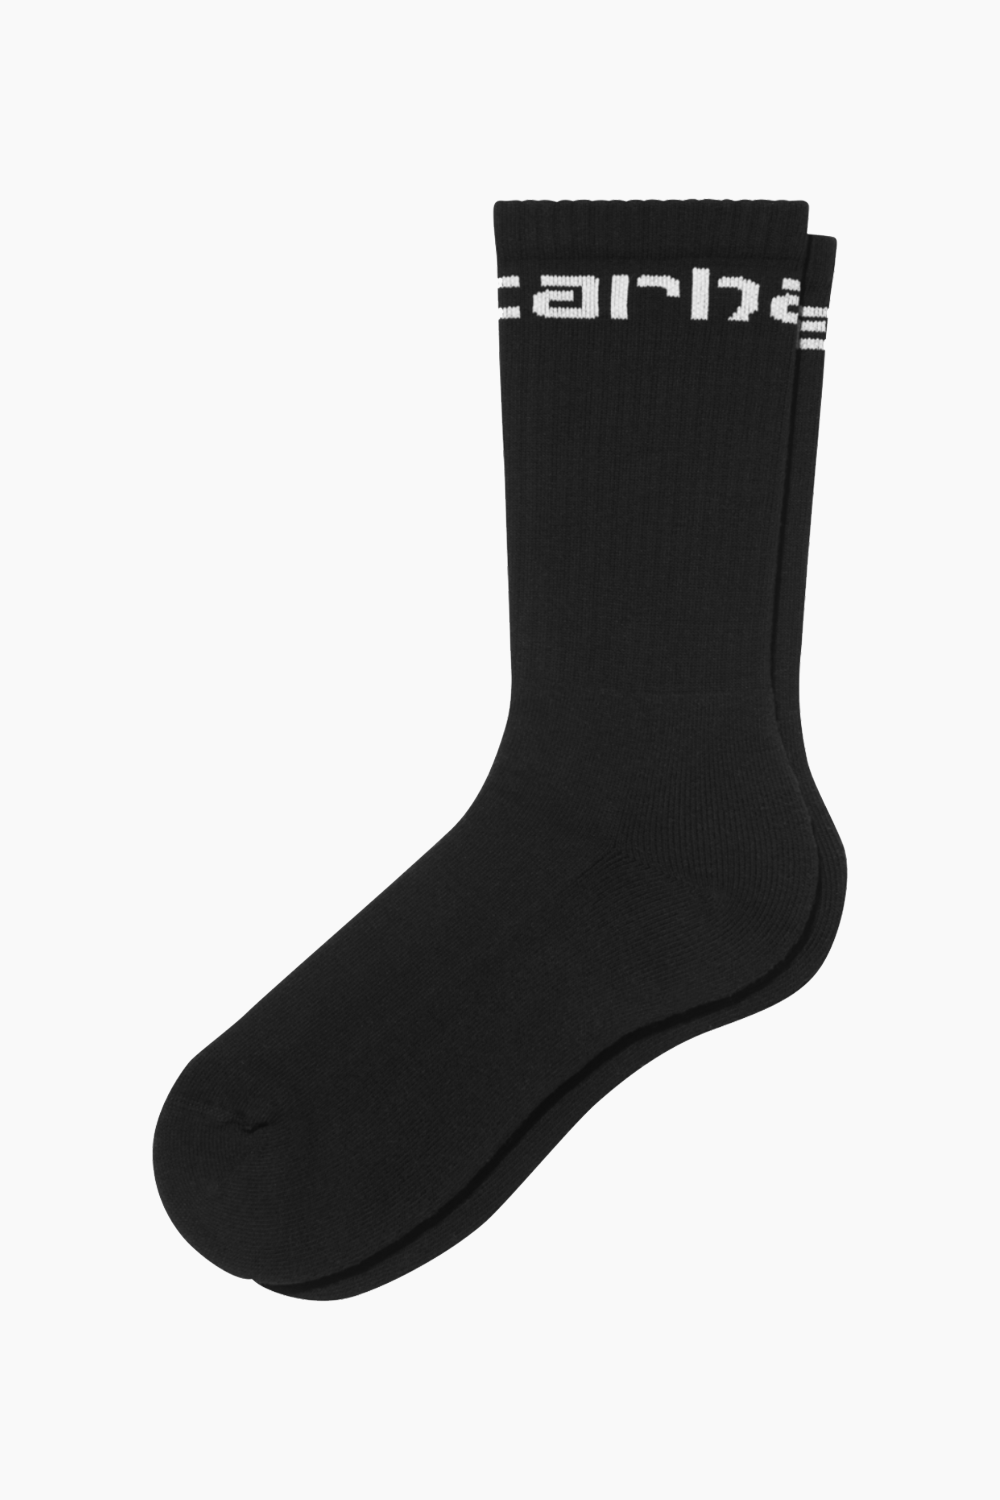 Se Carhartt WIP Socks - Black/White - Carhartt WIP - Sort One Size hos QNTS.dk